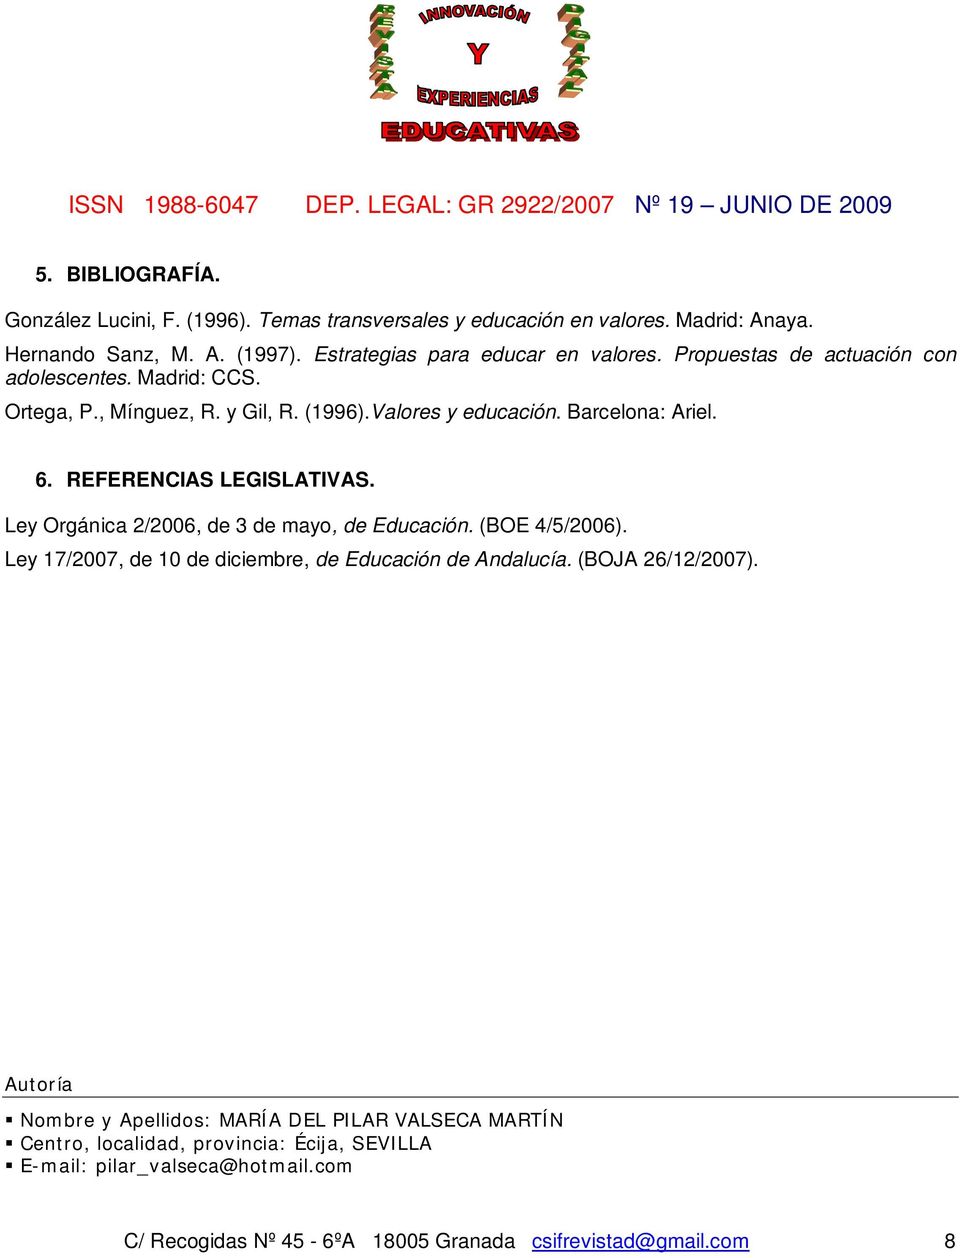 Ley Orgánica 2/2006, de 3 de mayo, de Educación. (BOE 4/5/2006). Ley 17/2007, de 10 de diciembre, de Educación de Andalucía. (BOJA 26/12/2007).